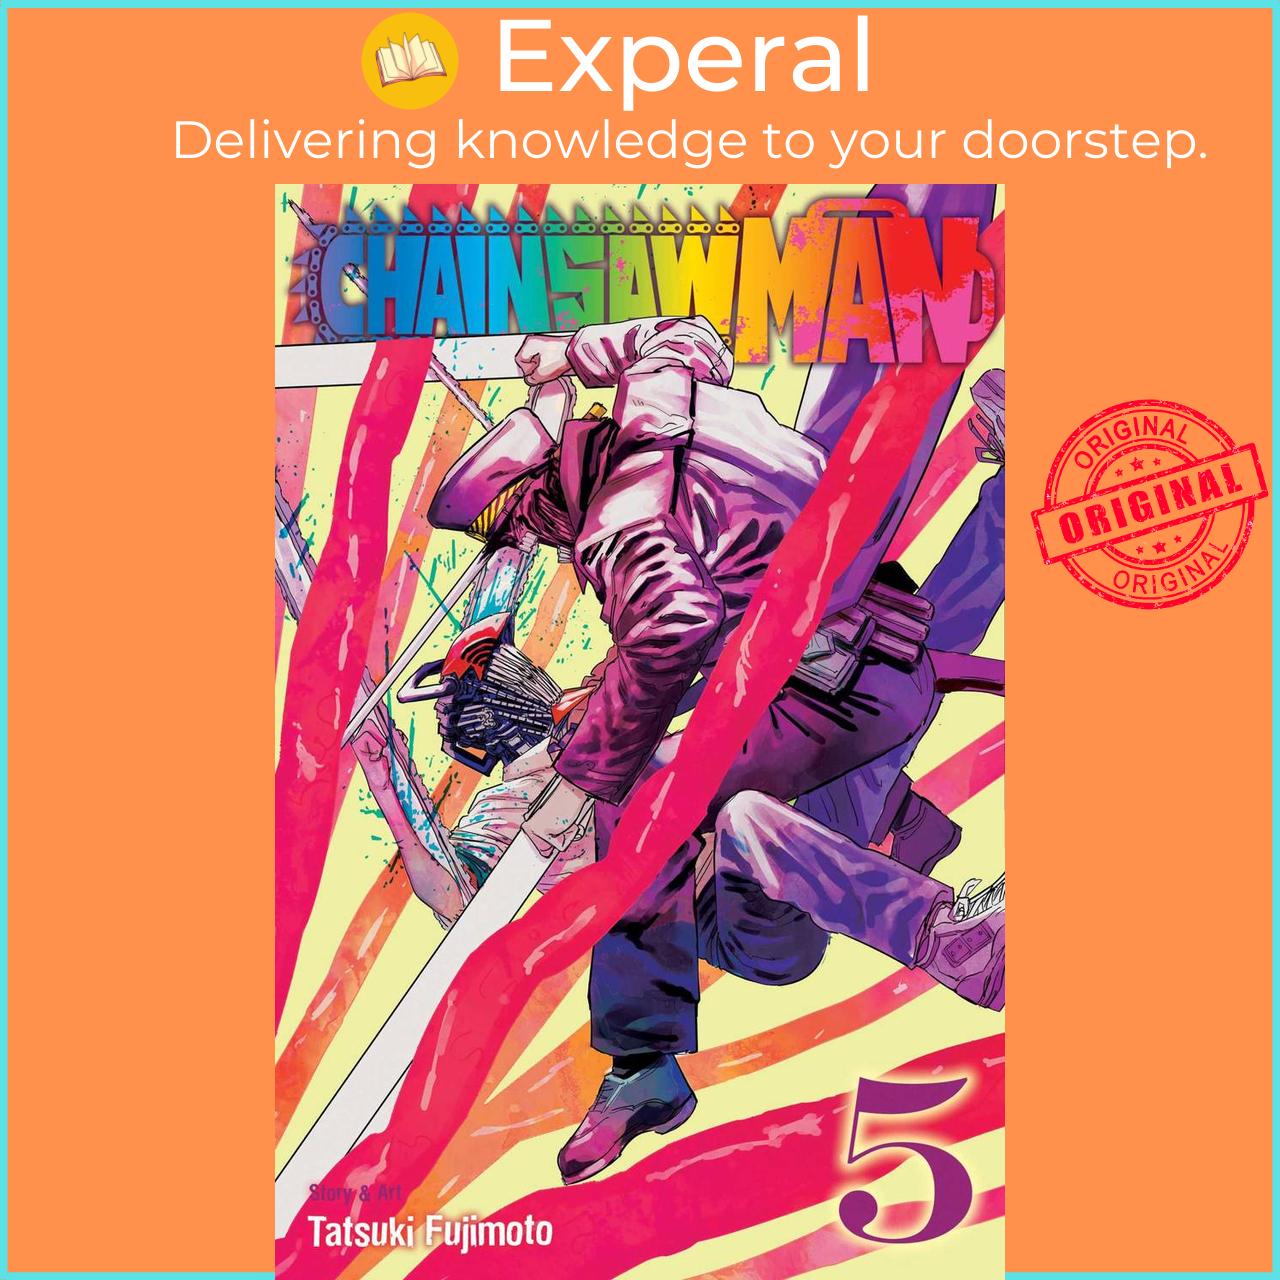 Sách - Chainsaw Man, Vol. 5 by Tatsuki Fujimoto (UK edition, paperback)